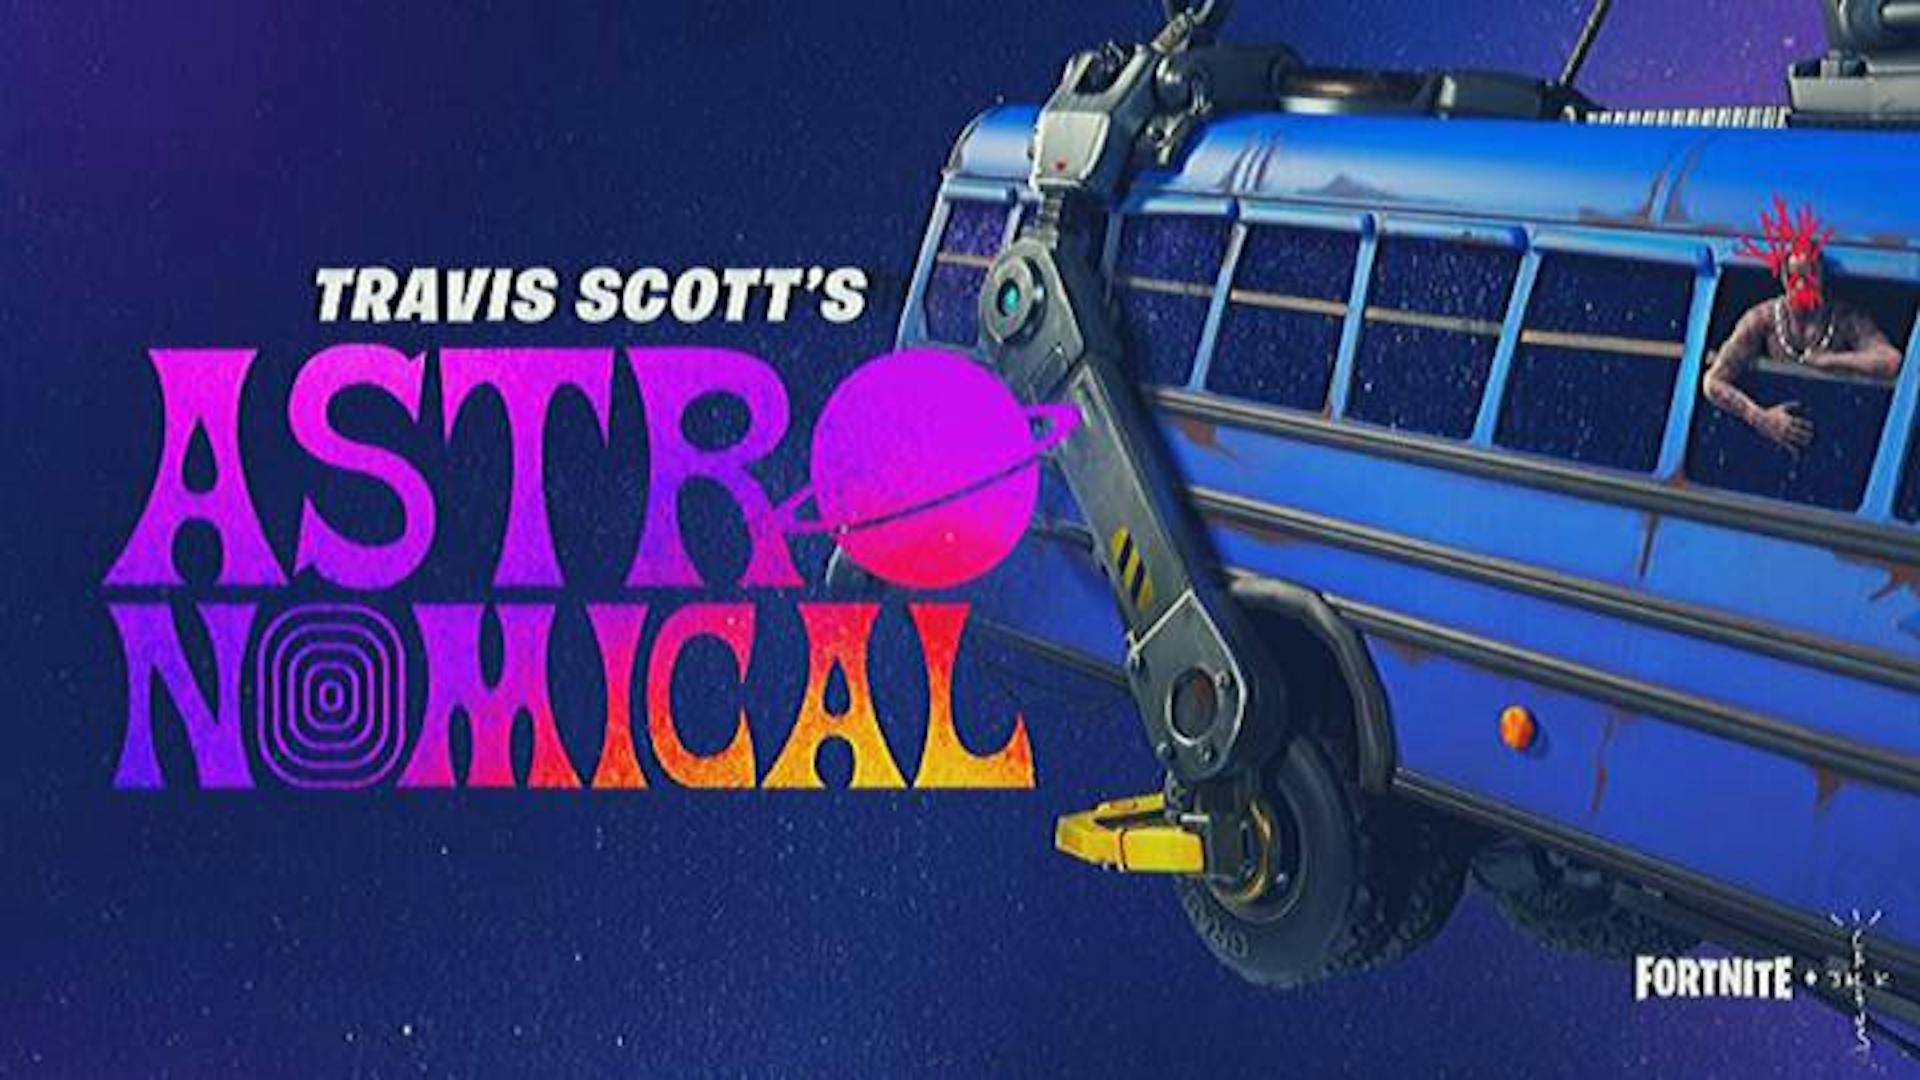 Travis Scott’s “Astronomical” concert was held on Fortnite. Source: AS.com